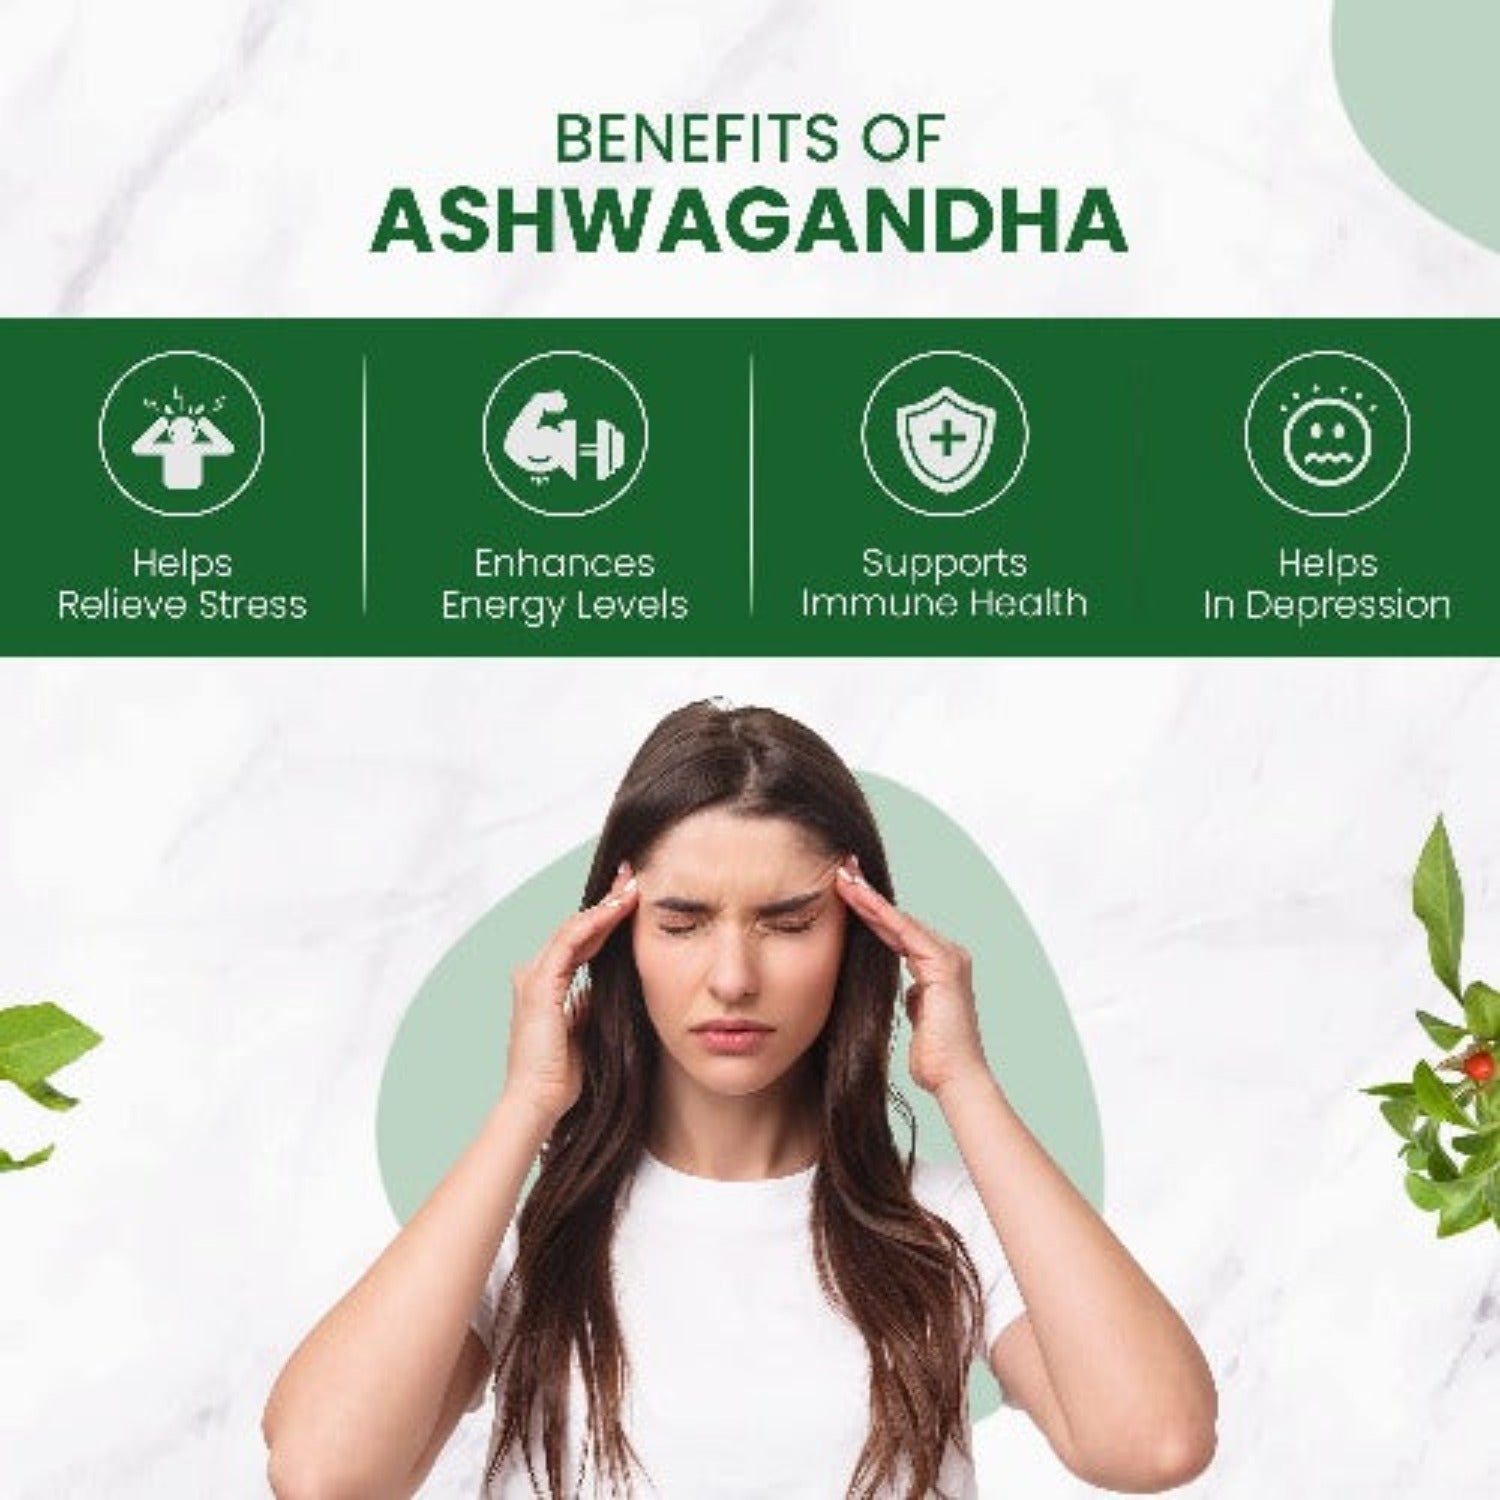 Himalayan Organics Ashwagandha 1000mg/Serve for Anxiety Stress Relief & Endurance Vegetarian Capsules